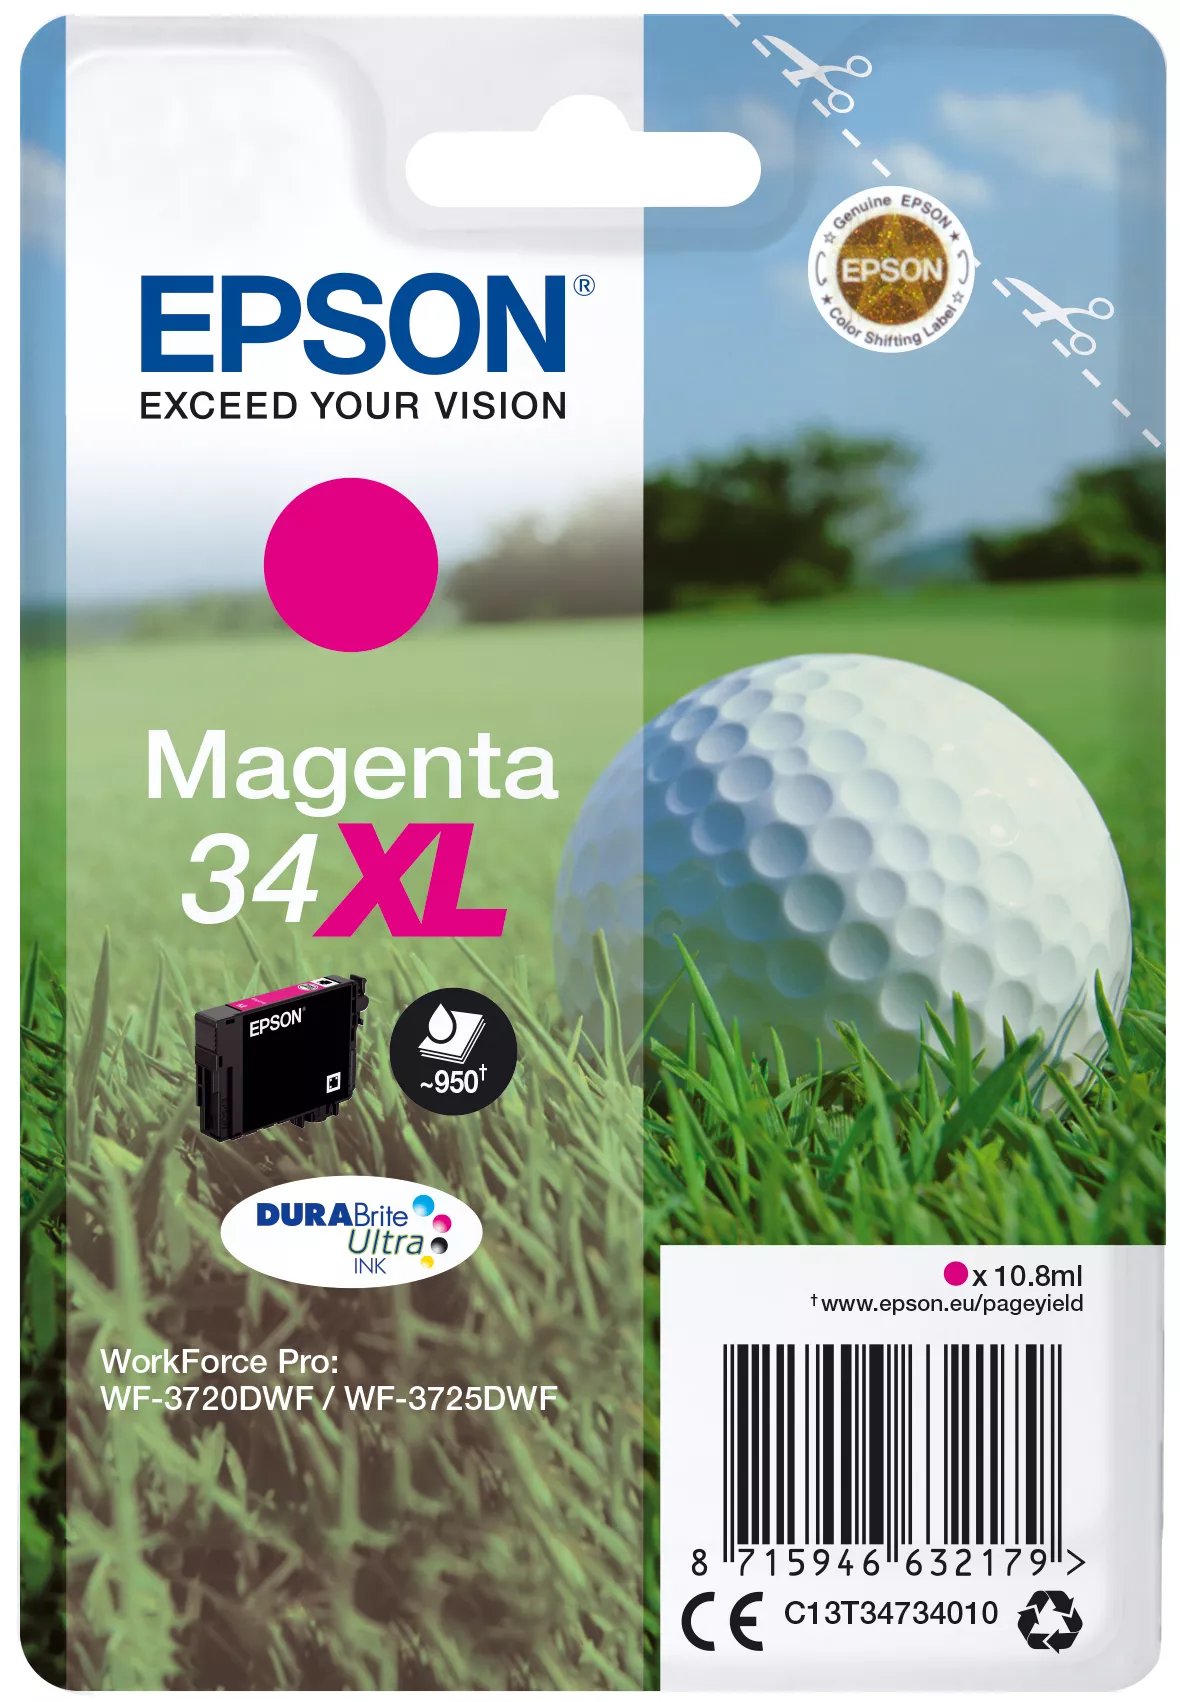 Achat EPSON Singlepack 34XL Magenta DURABrite Encre Ultra (XL - 8715946632179